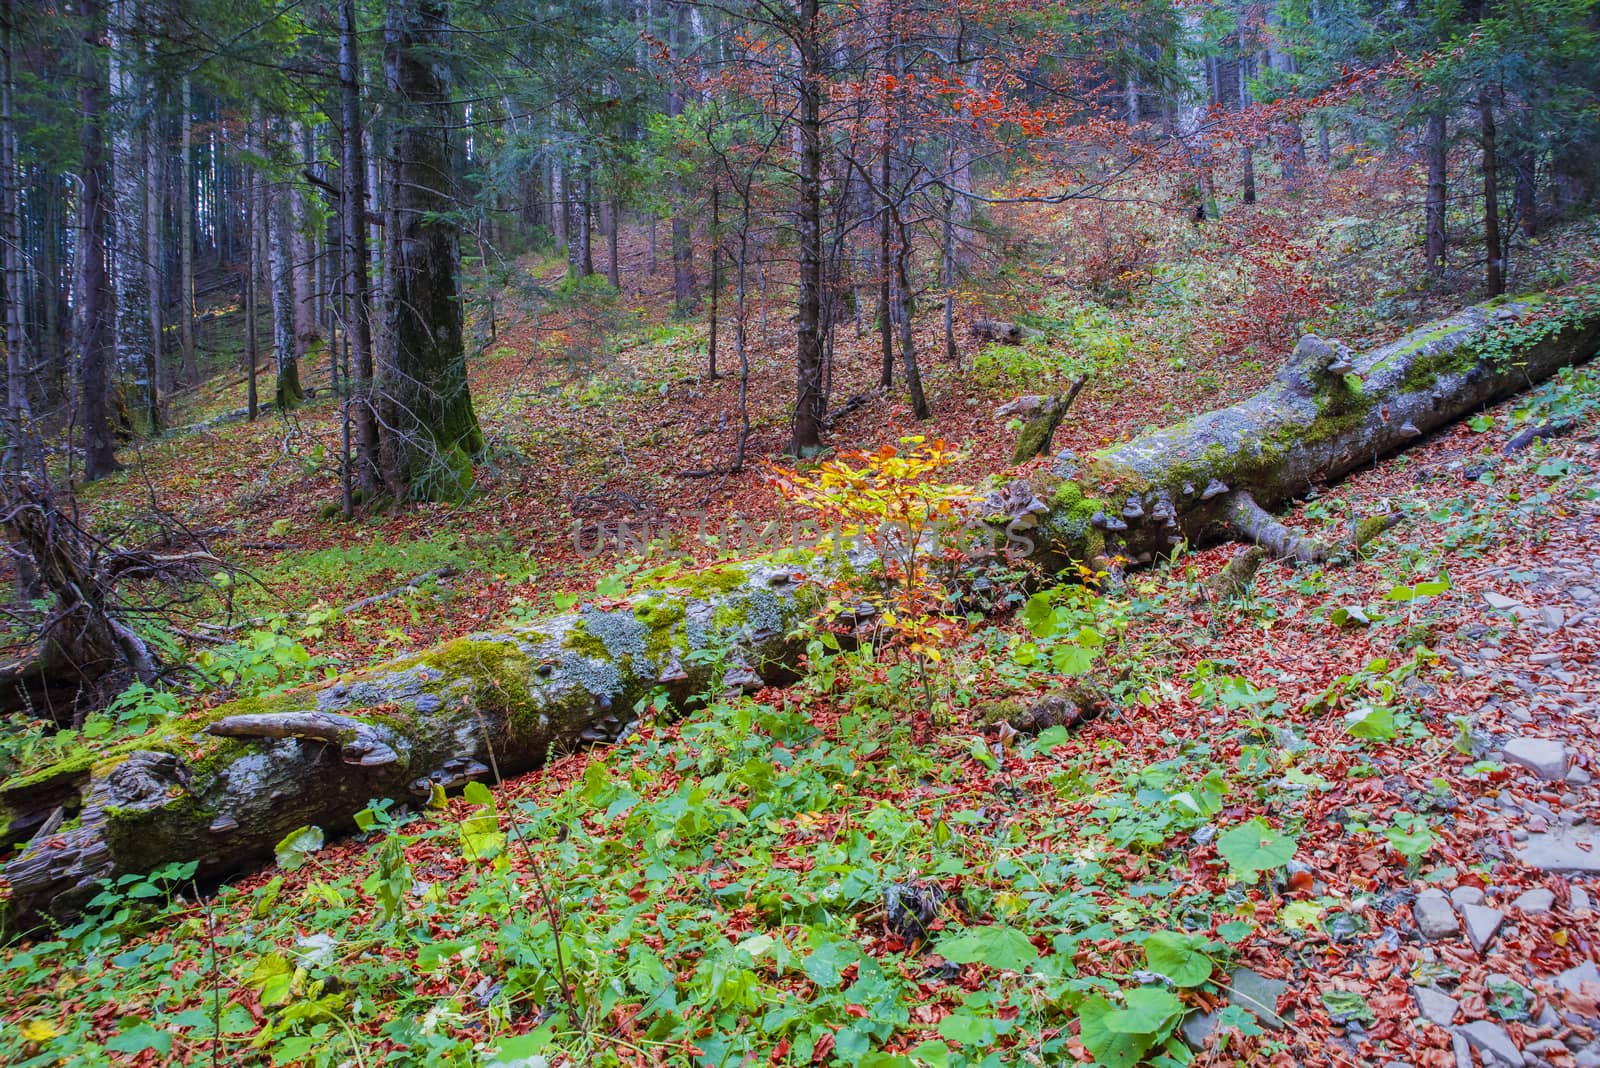 Fallen tree trunk in autumn forest, autumn landscape